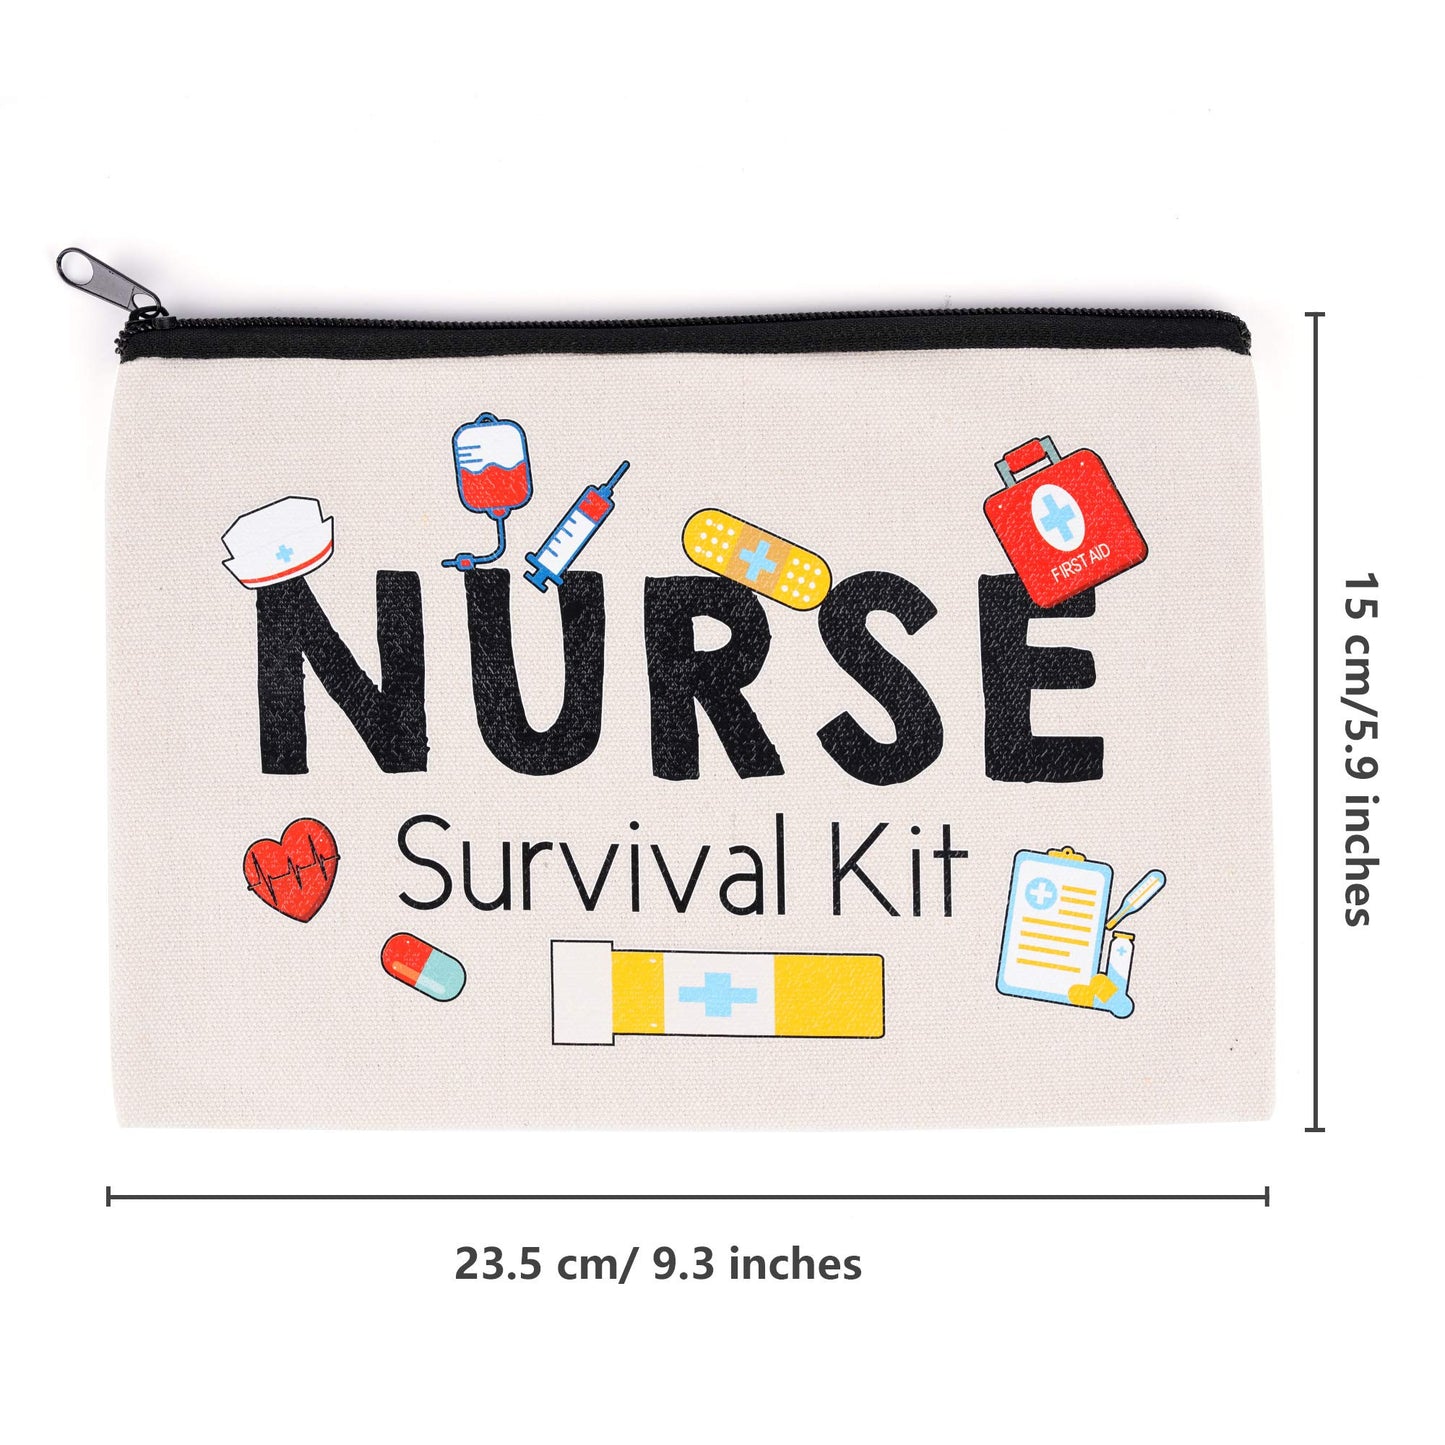 Kolewo4ever 8 Pieces Nurse Survival Kit Makeup Bags Funny Nurse Cosmetic Bag Nurse Practitioner Gifts Toiletry Bag For Nurse Practitioner Supplies